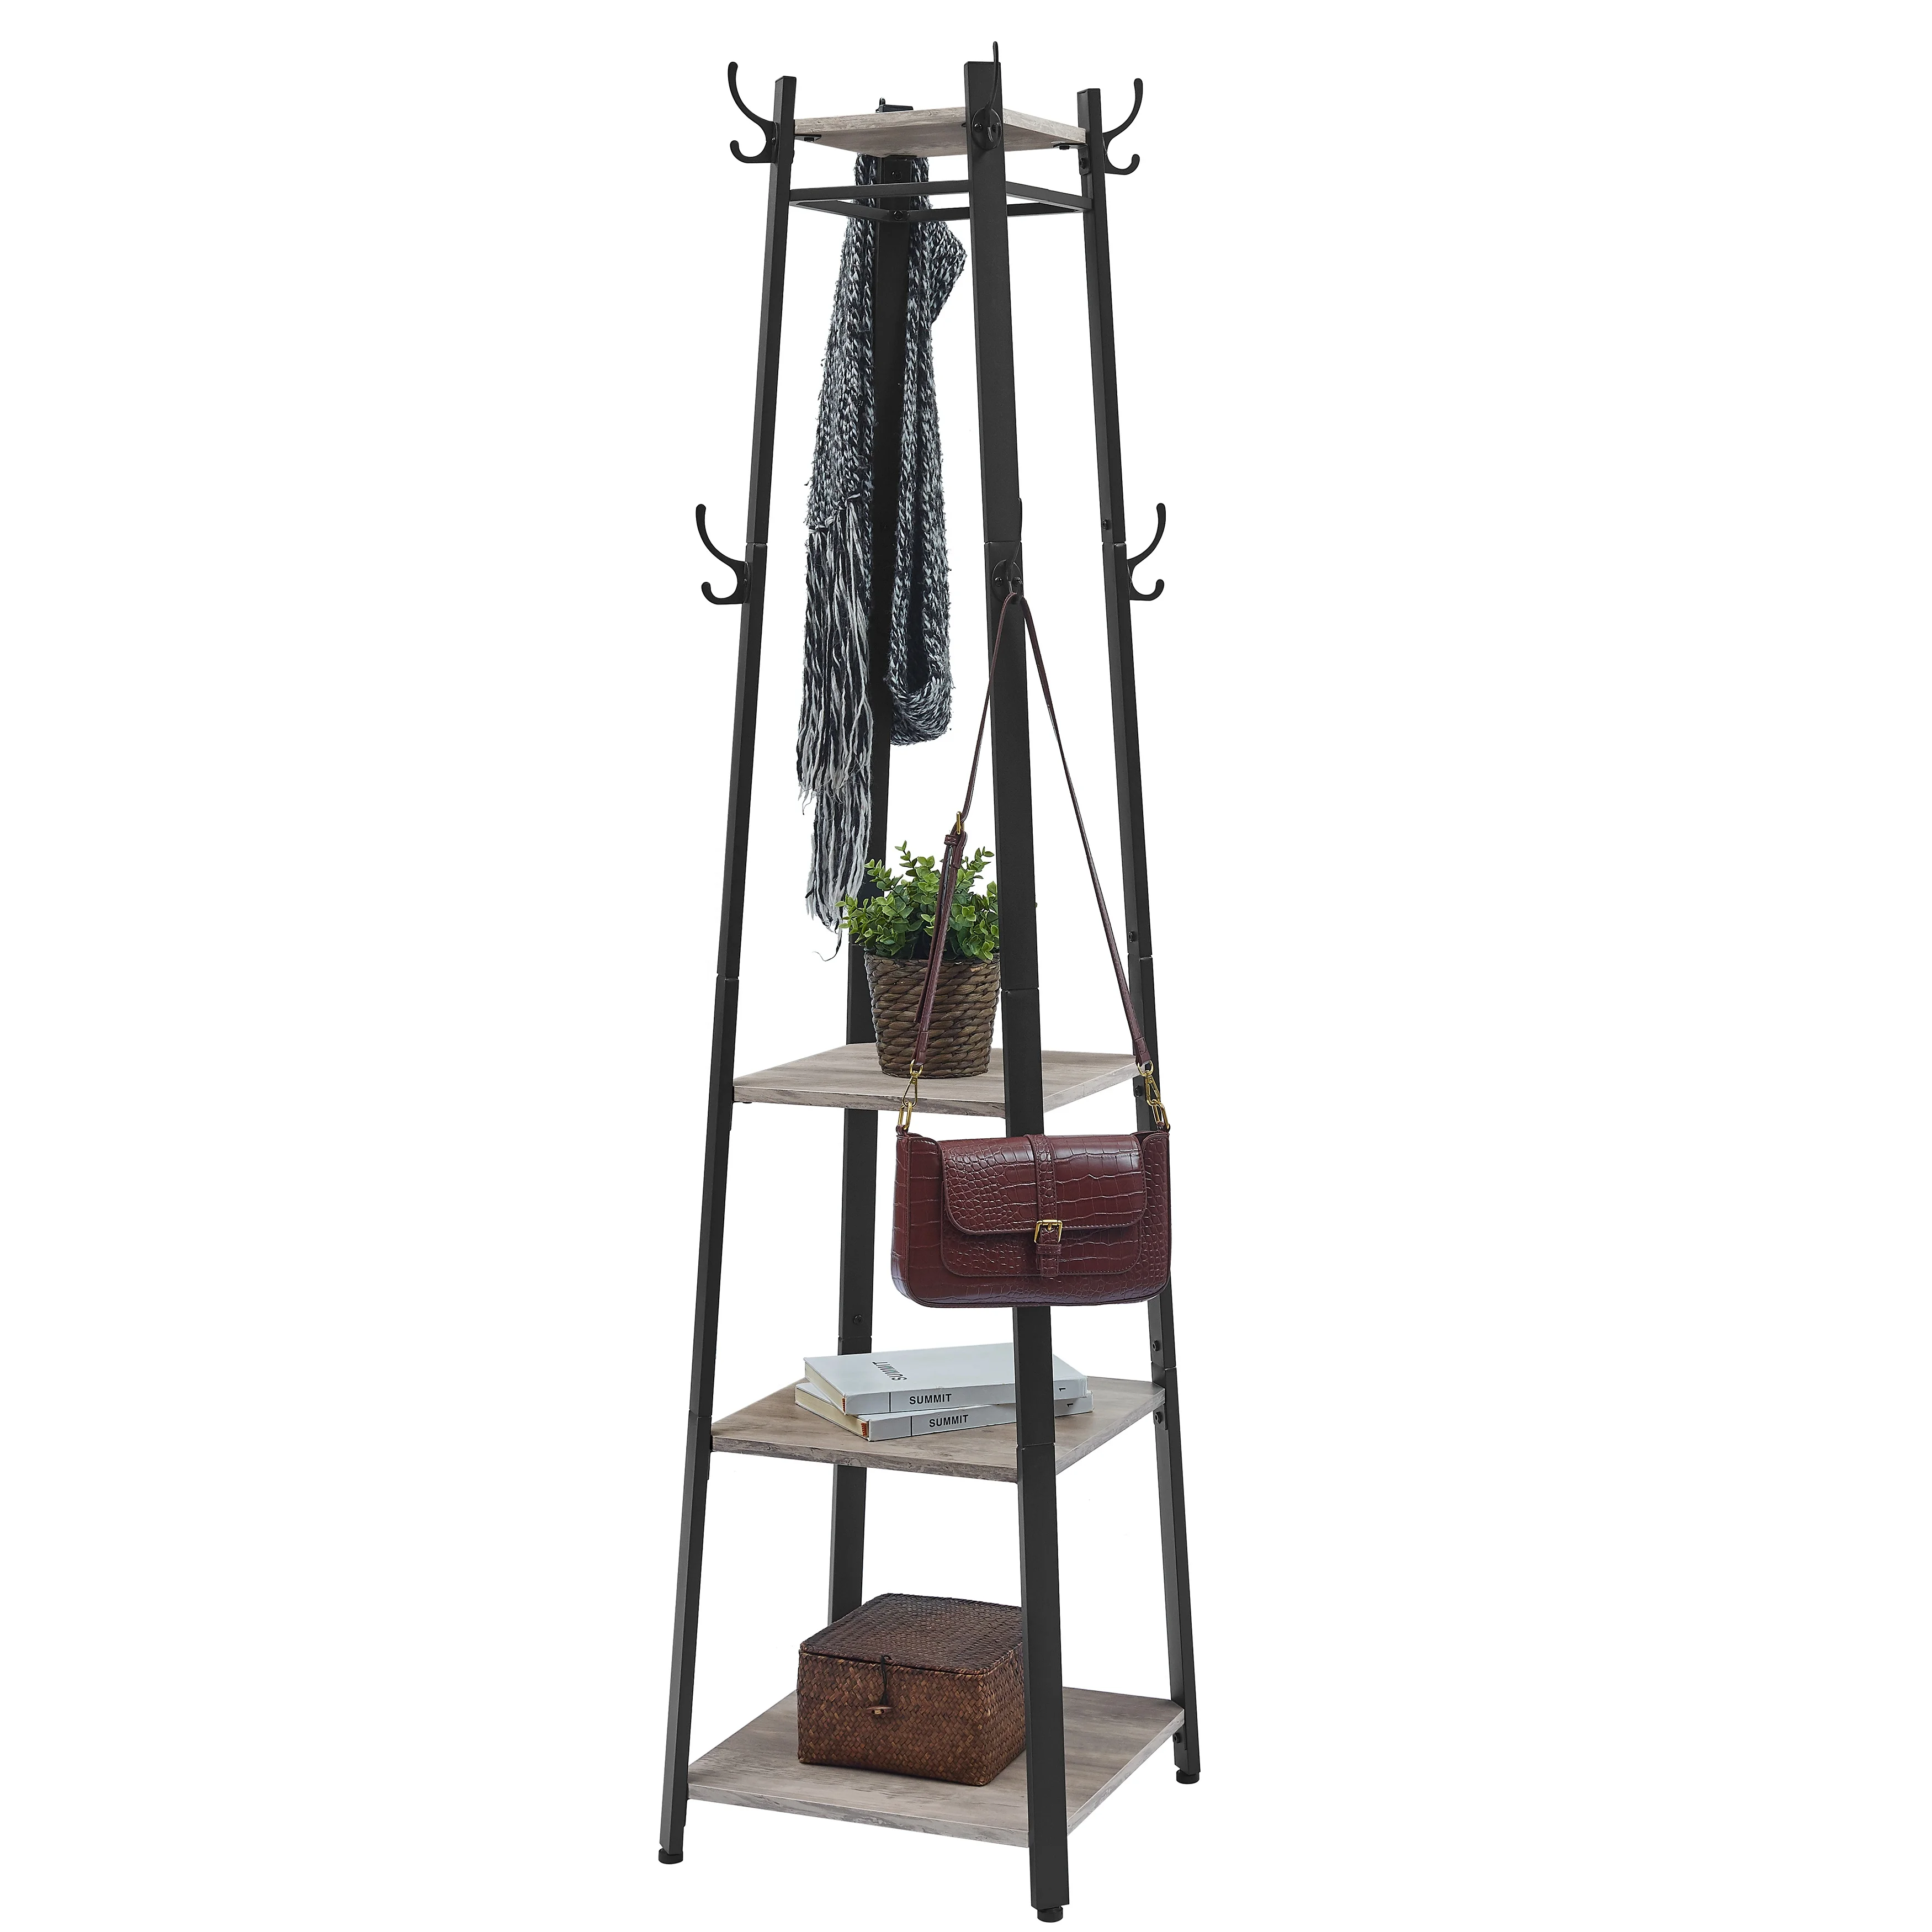 VASAGLE modern freestanding light metal coat rack with 3 shelves wood space saving sturdy coat rack